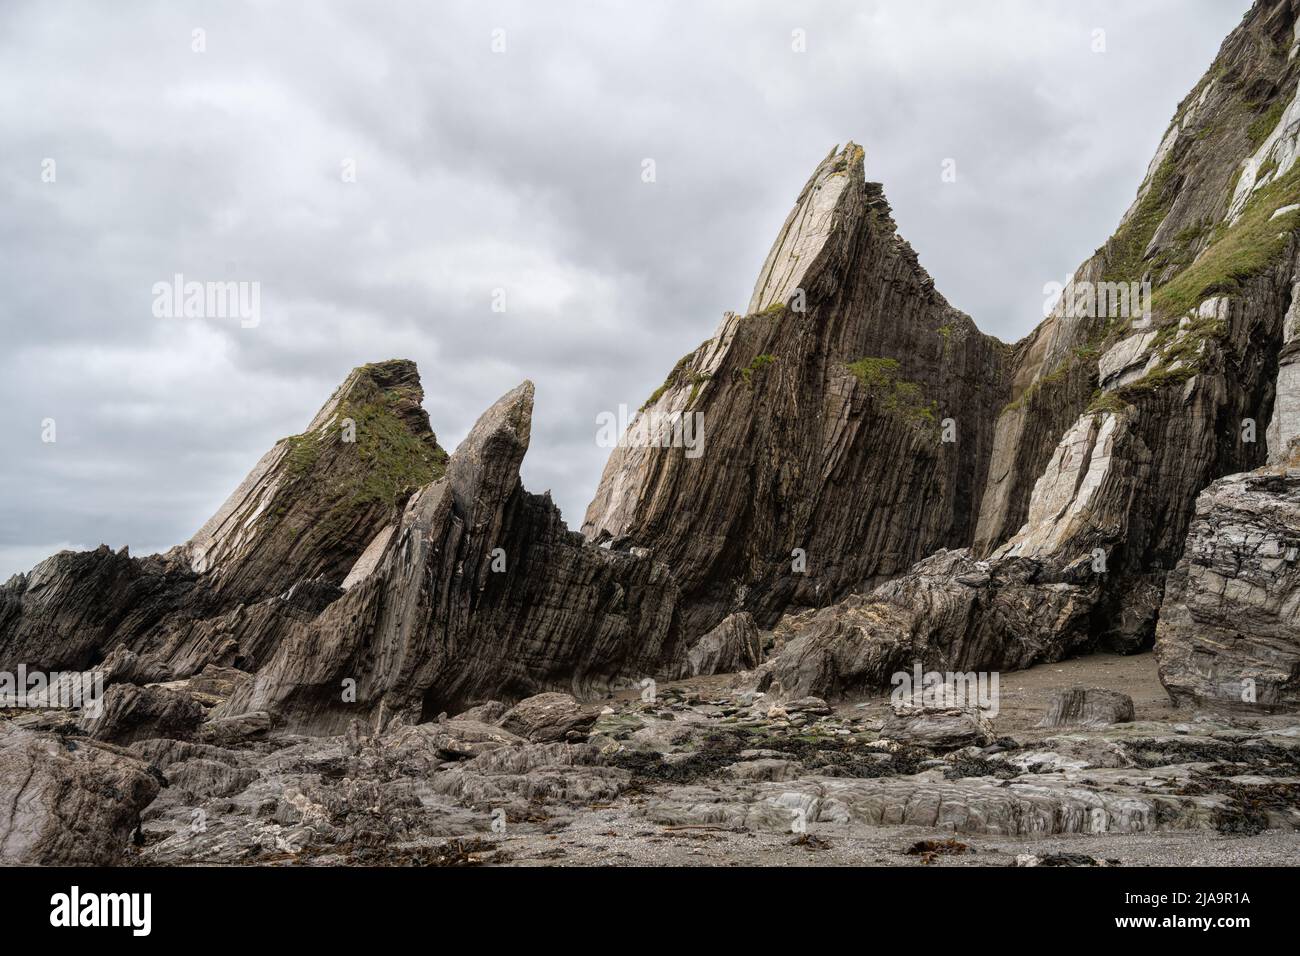 Stone formations at Wyscombe Beach, Devon, England. Stock Photo